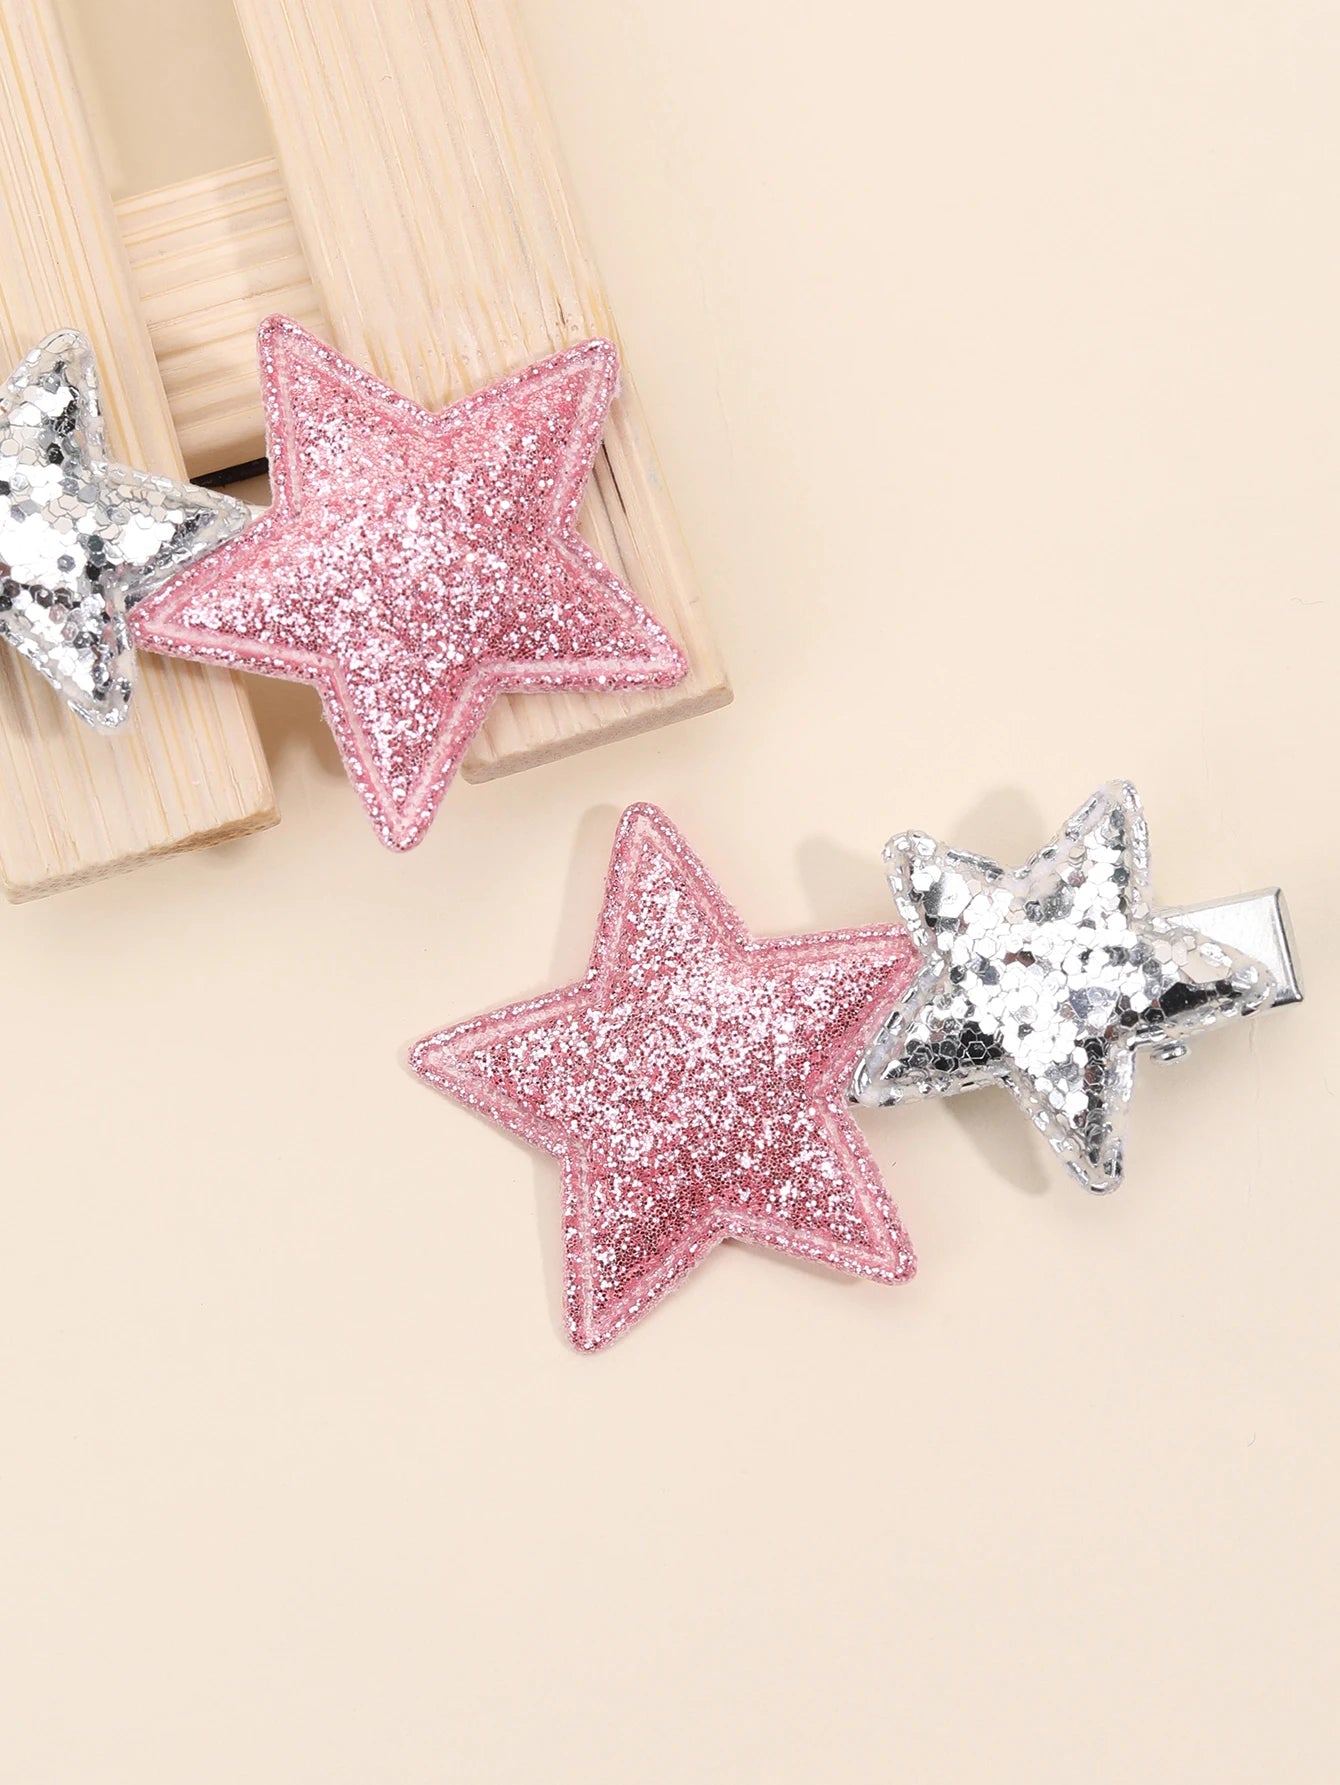 New Silver Star Hair Clip for Kids Girls Pink Glitter Hairpins Headwear